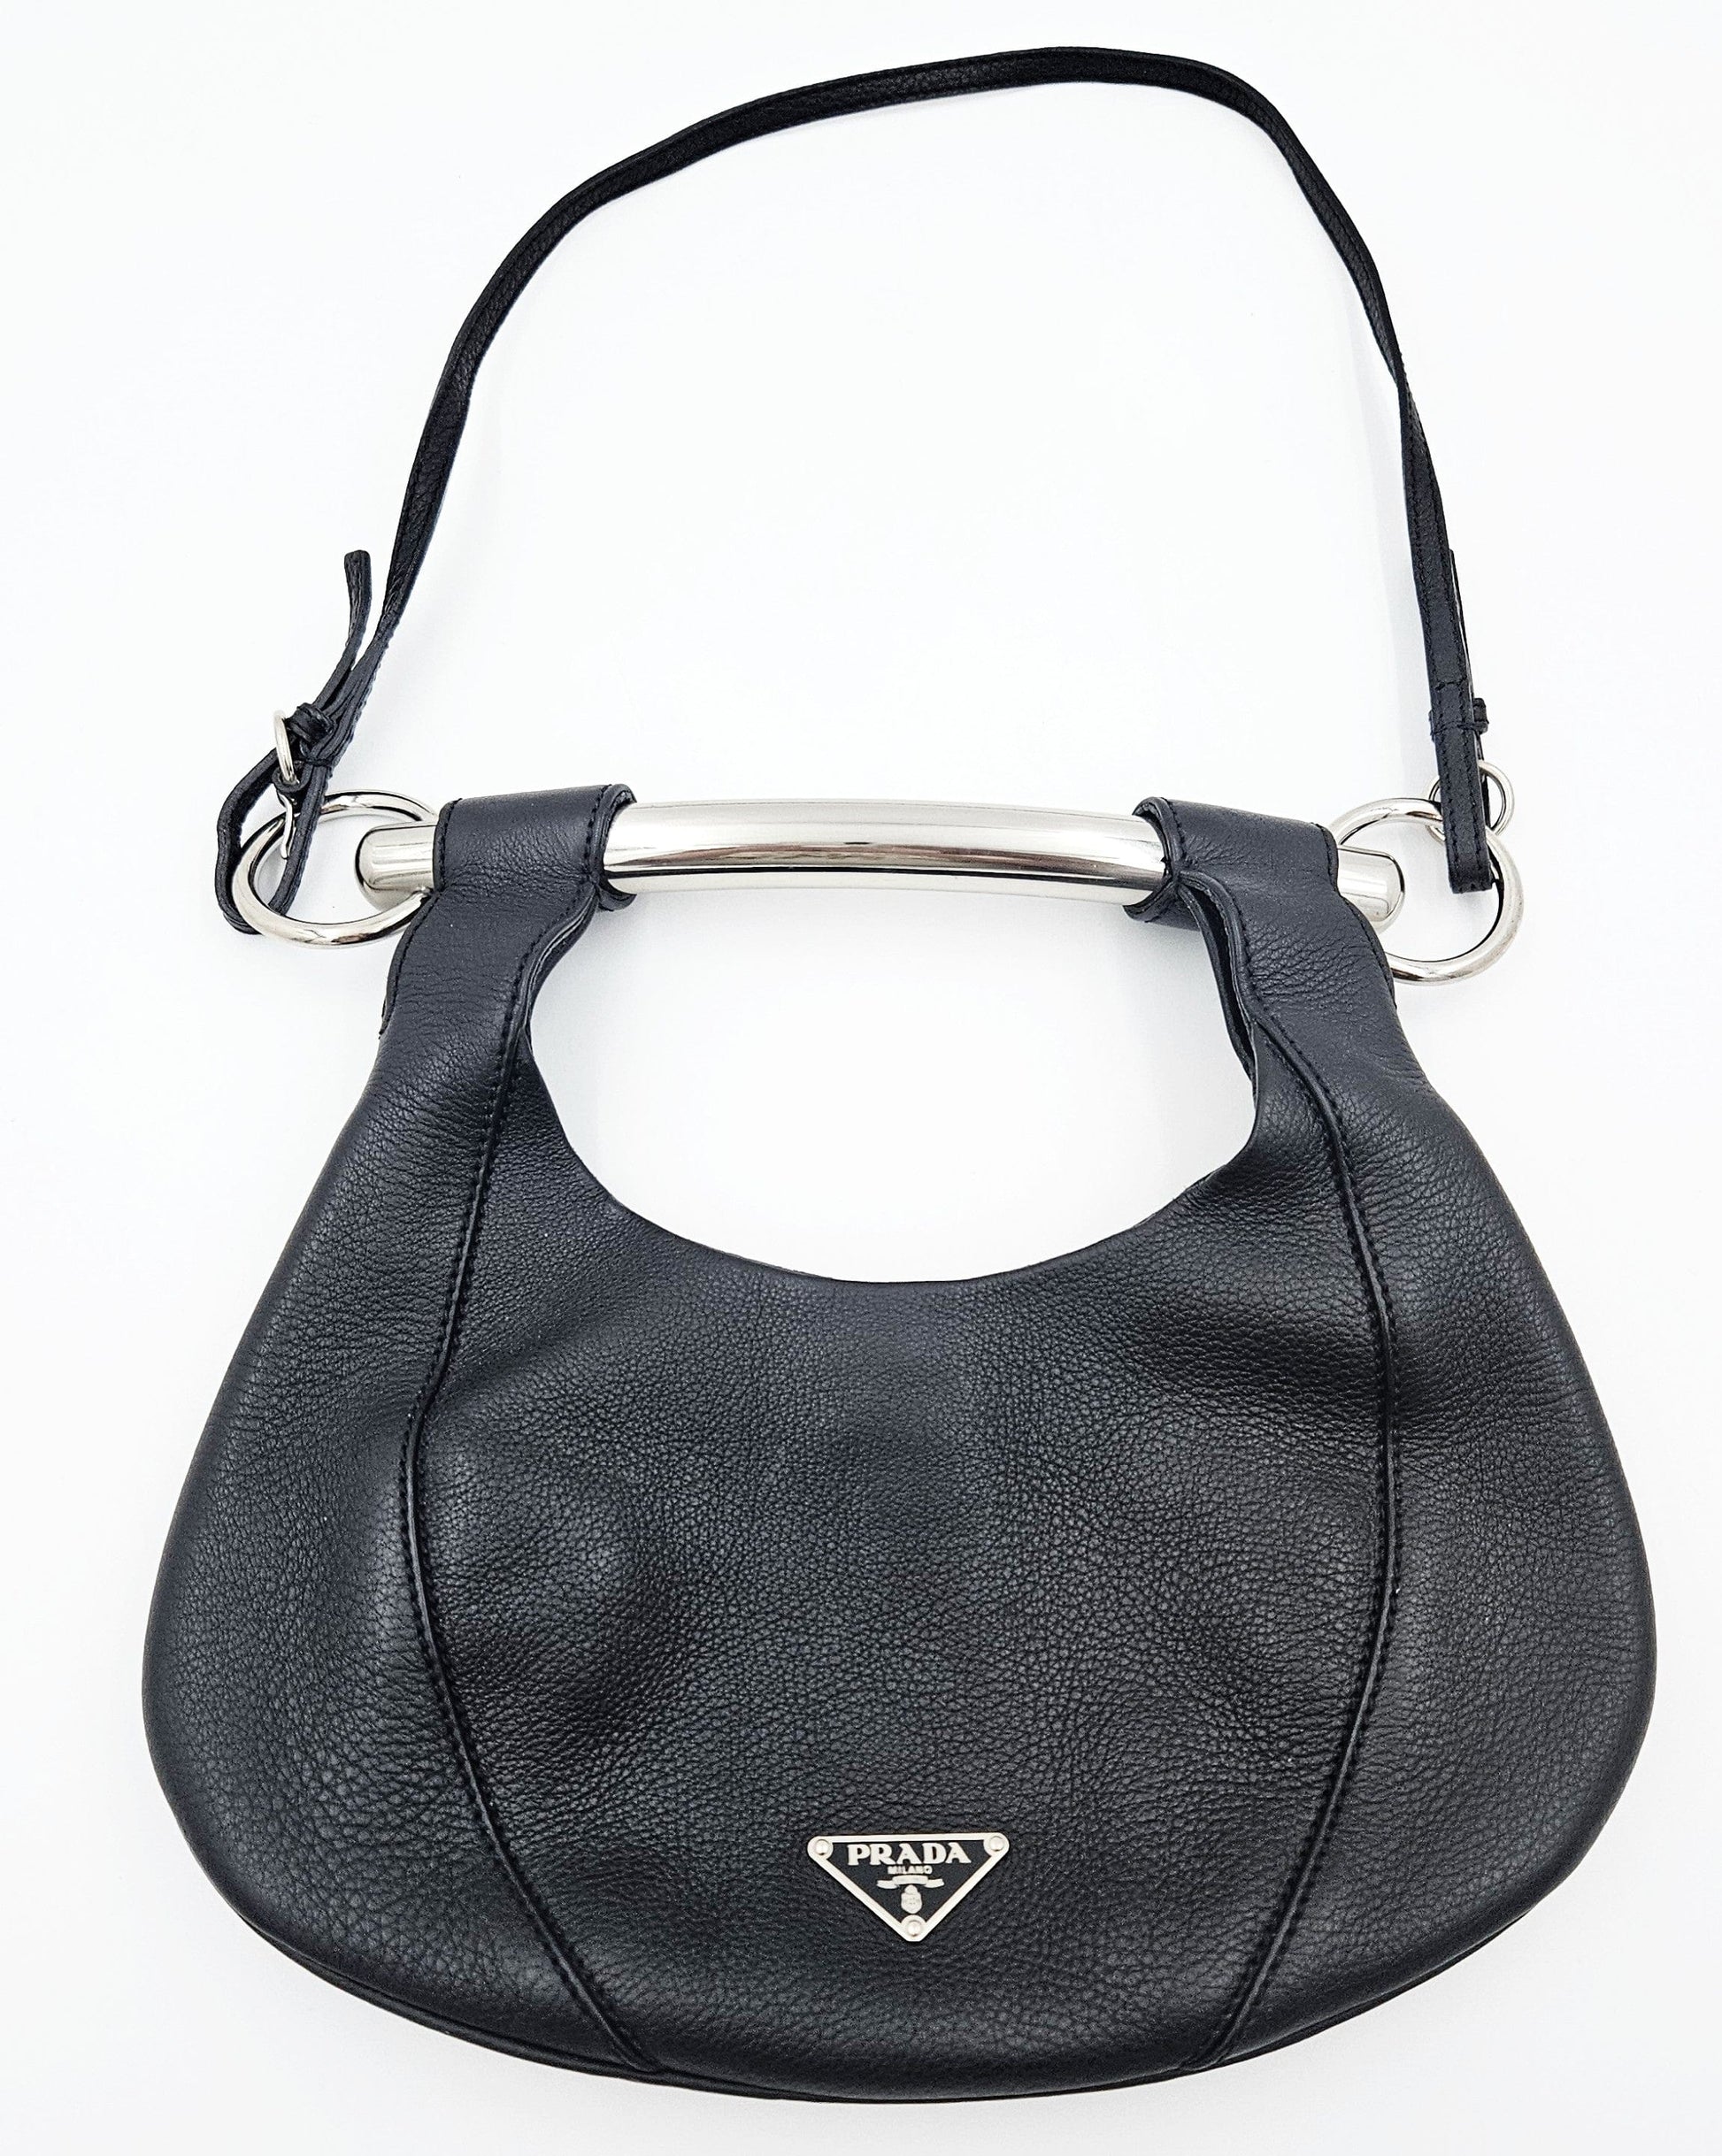 Prada Handbag Vintage Prada Handbag Purse